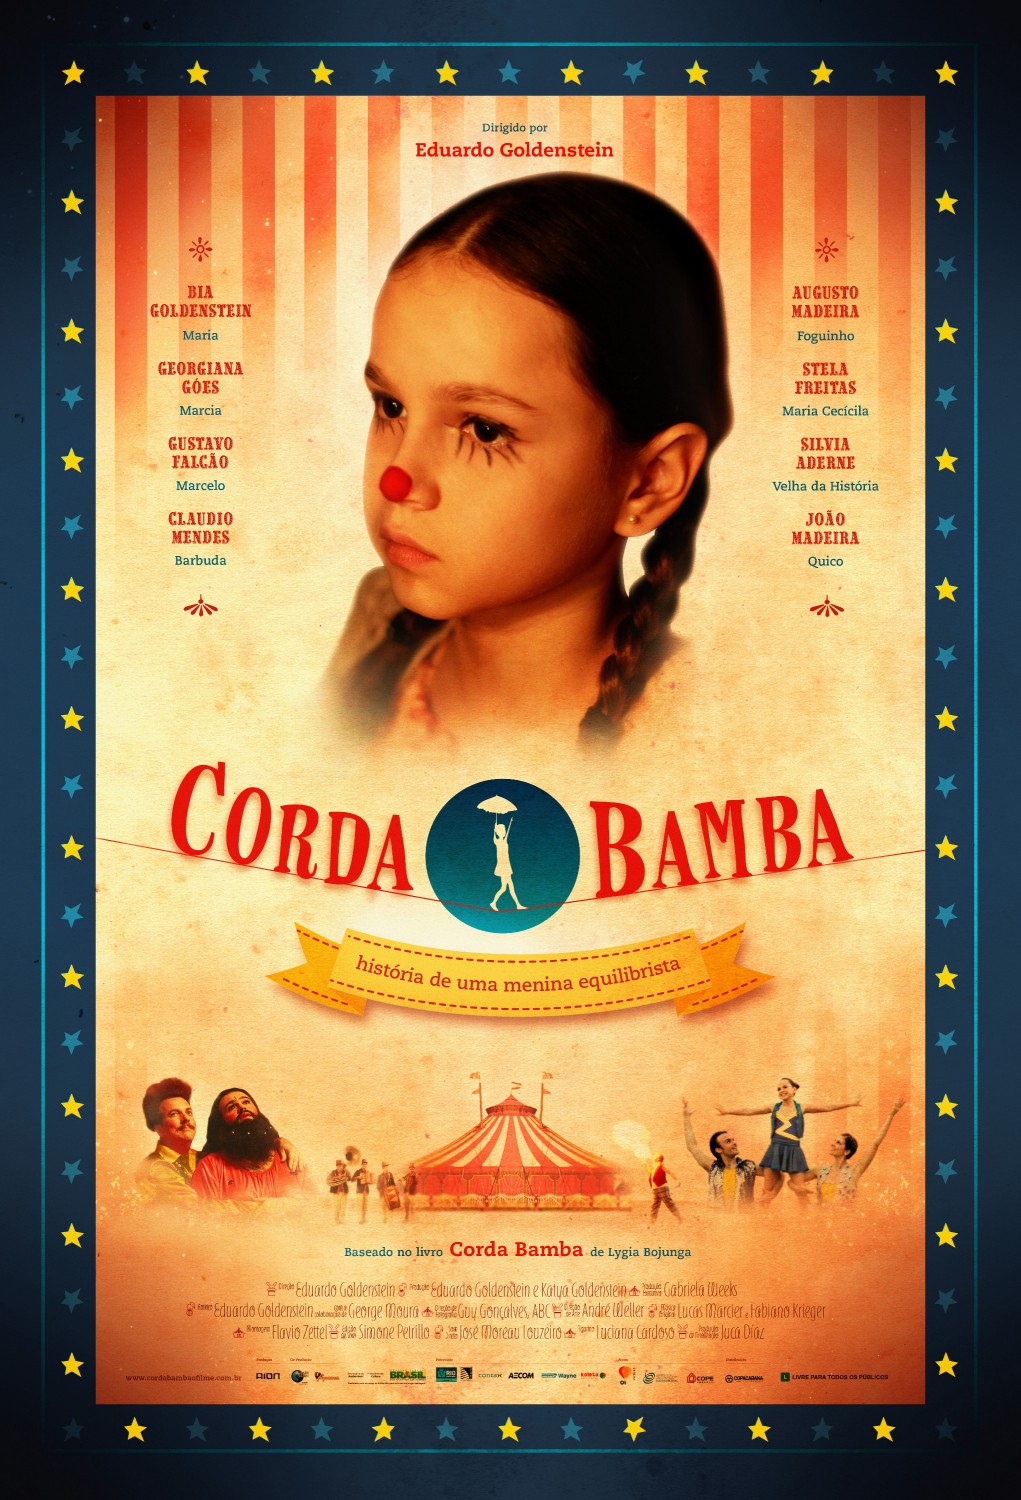 Extra Large Movie Poster Image for Corda Bamba, historia de uma menina equilibrista 